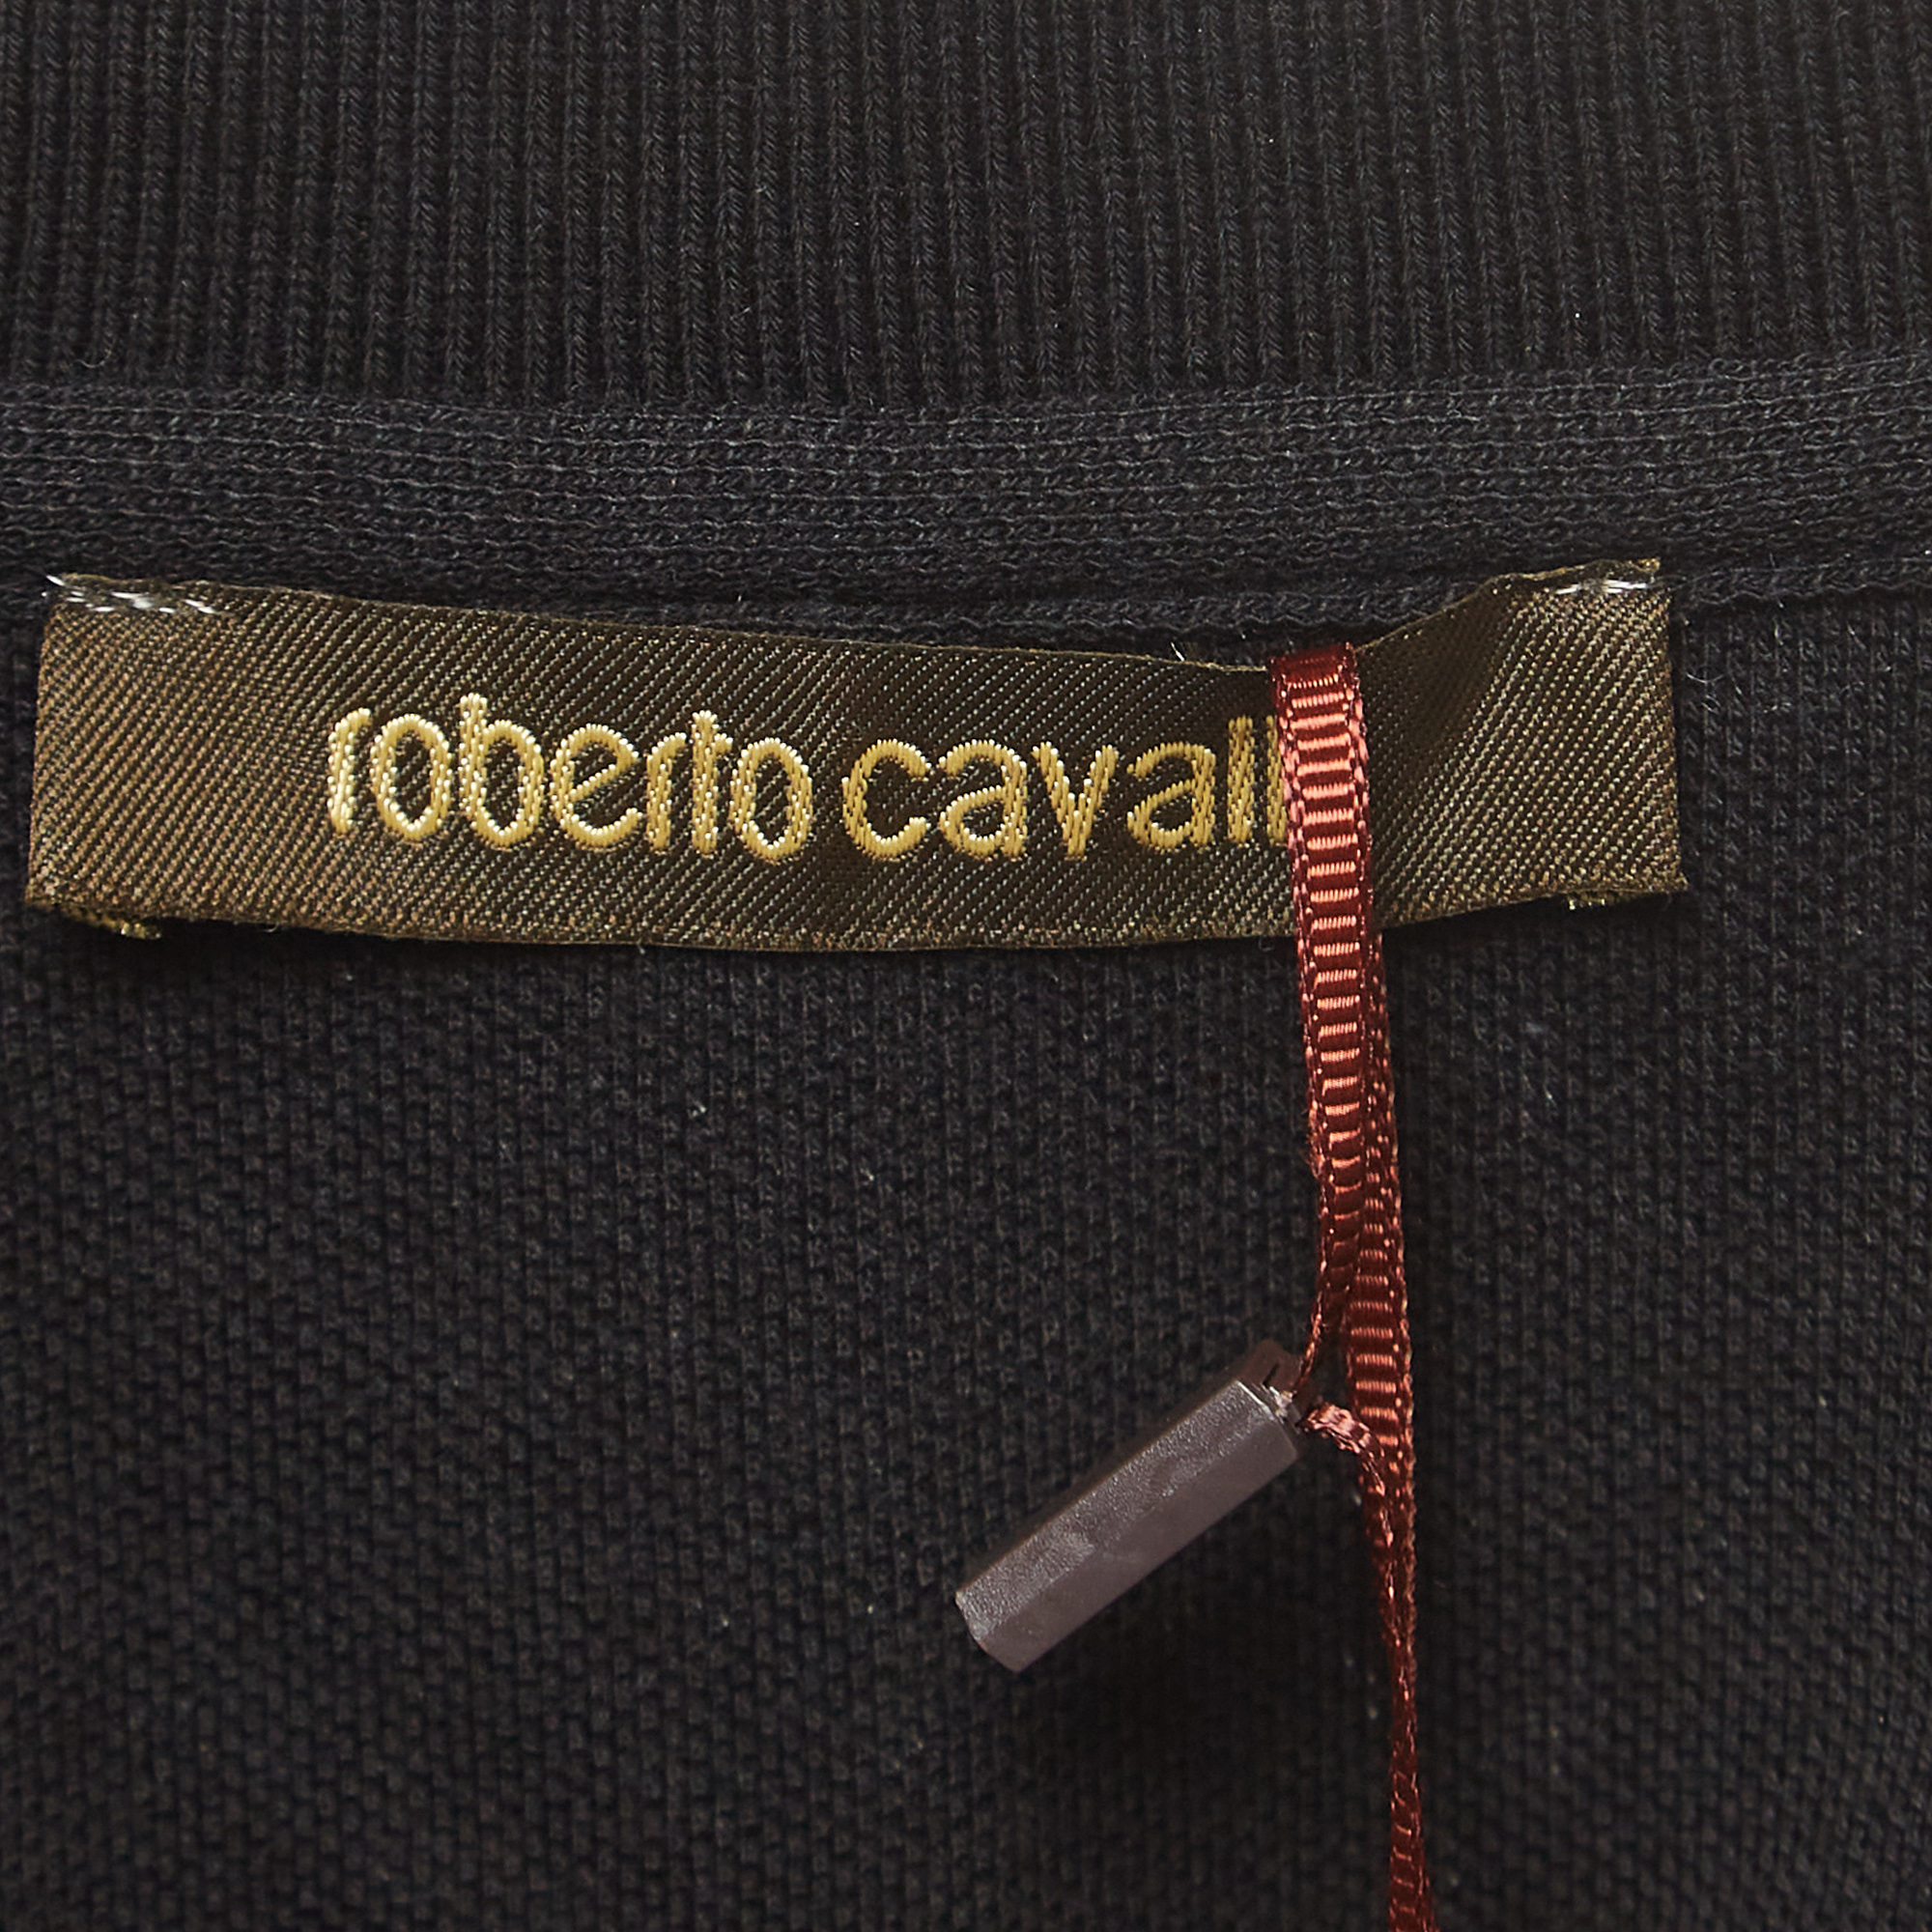 Roberto Cavalli Black Logo Embroidered Cotton Pique Polo T-Shirt L